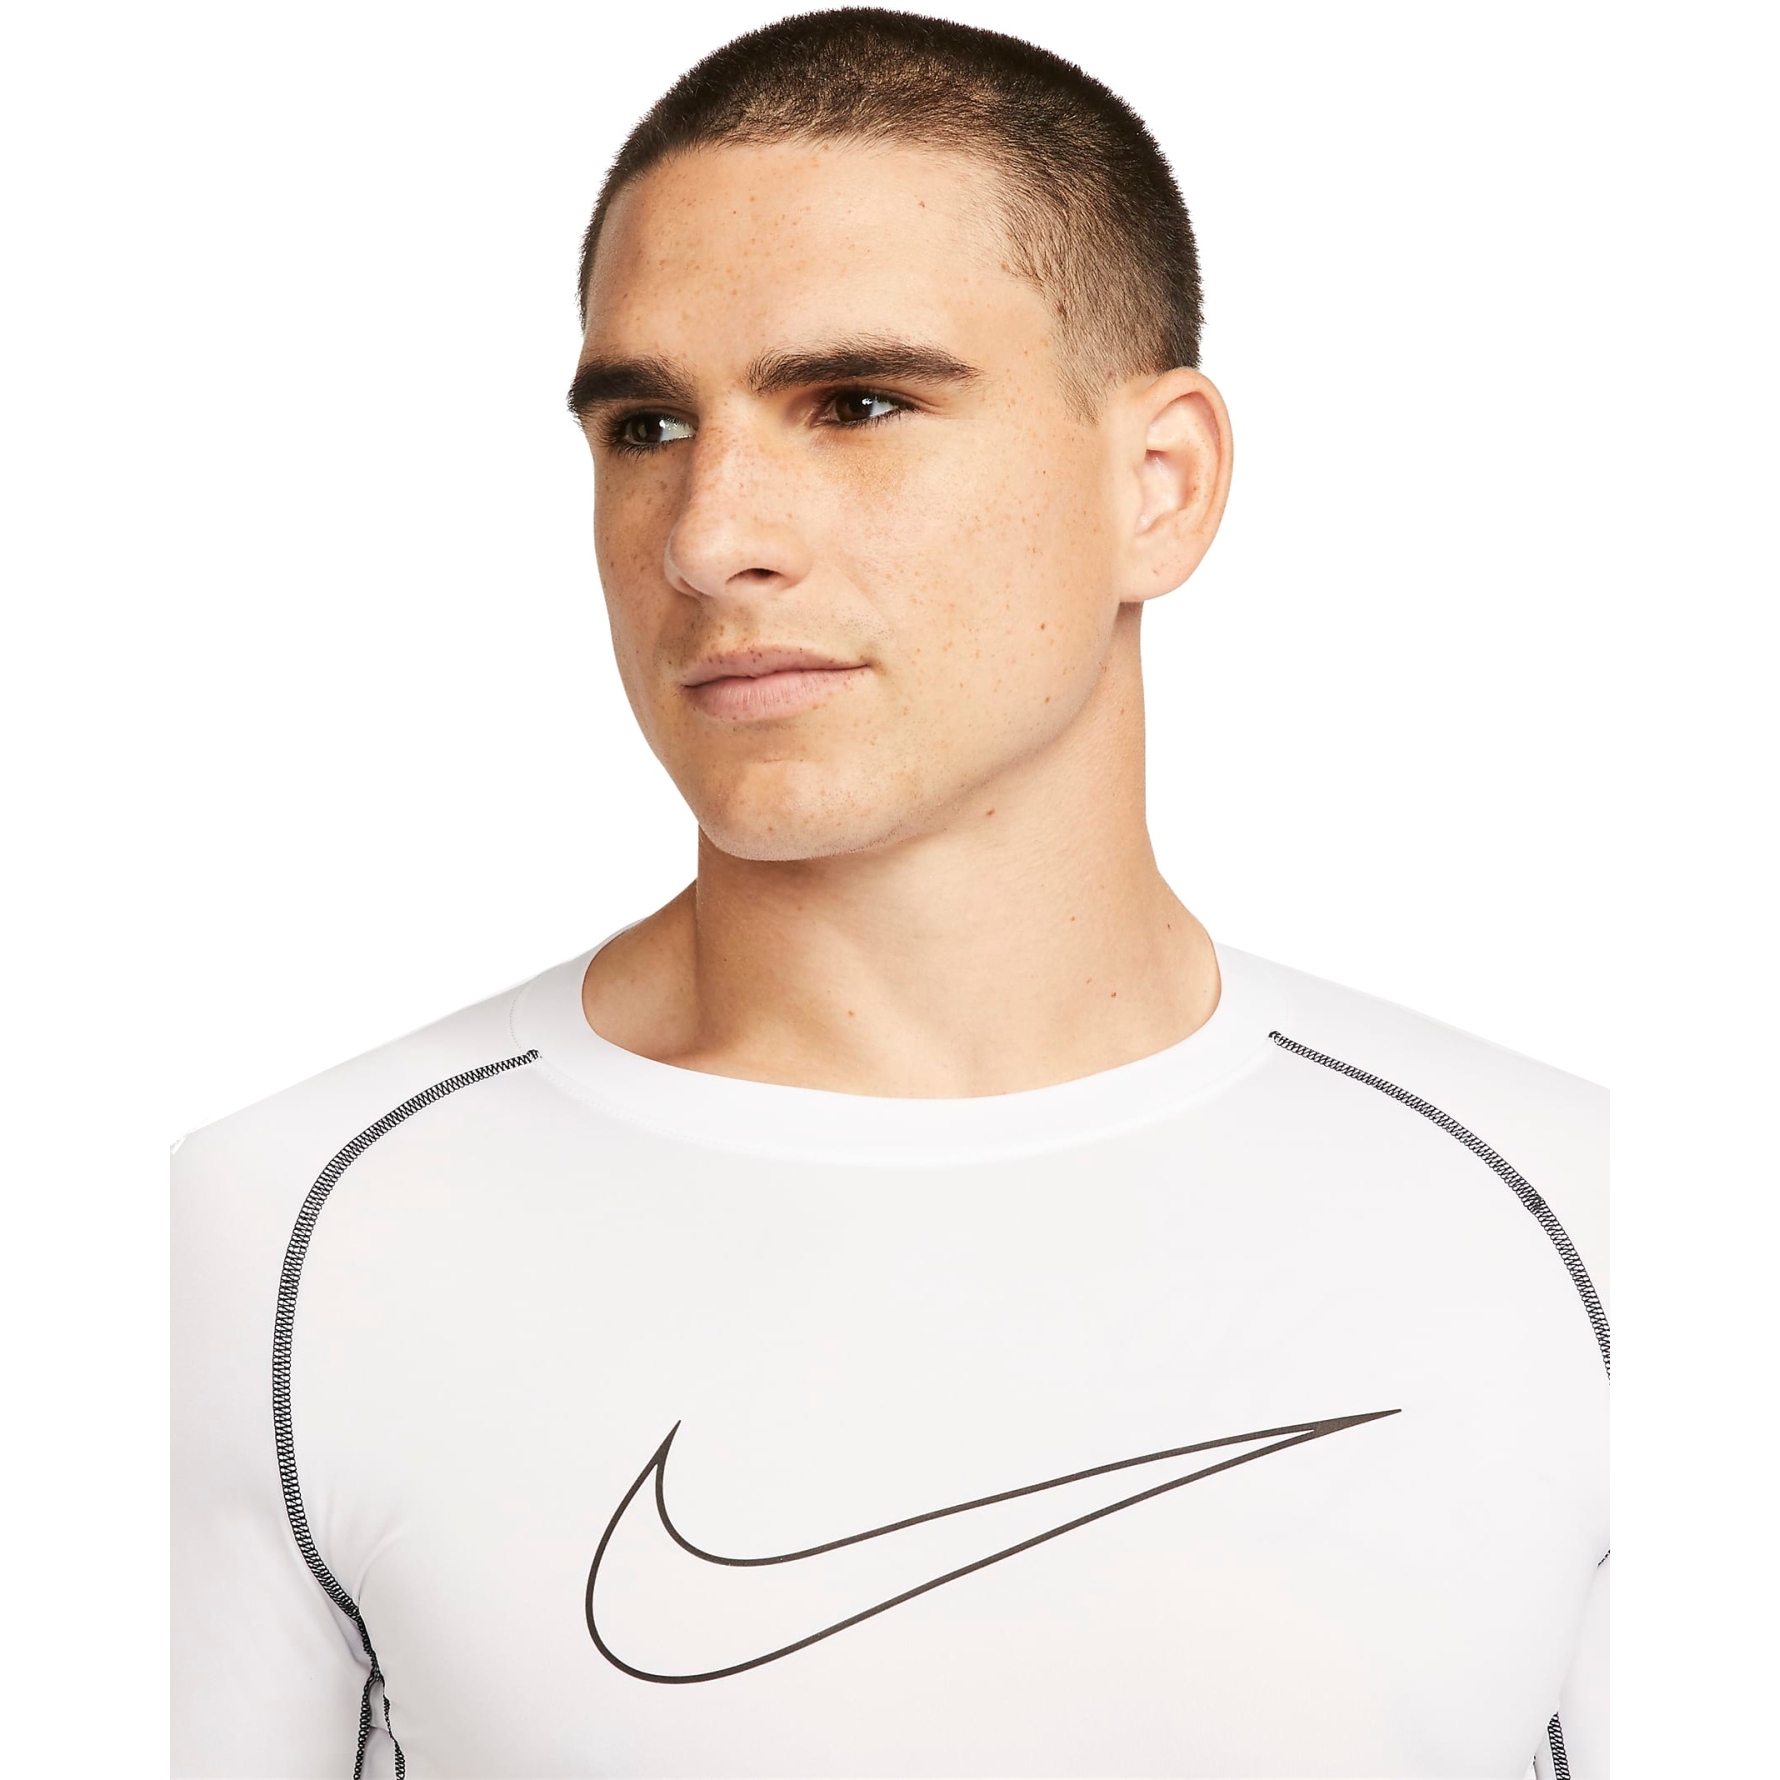 Nike Pro Dri-FIT Men's Slim Fit Short-Sleeve Top